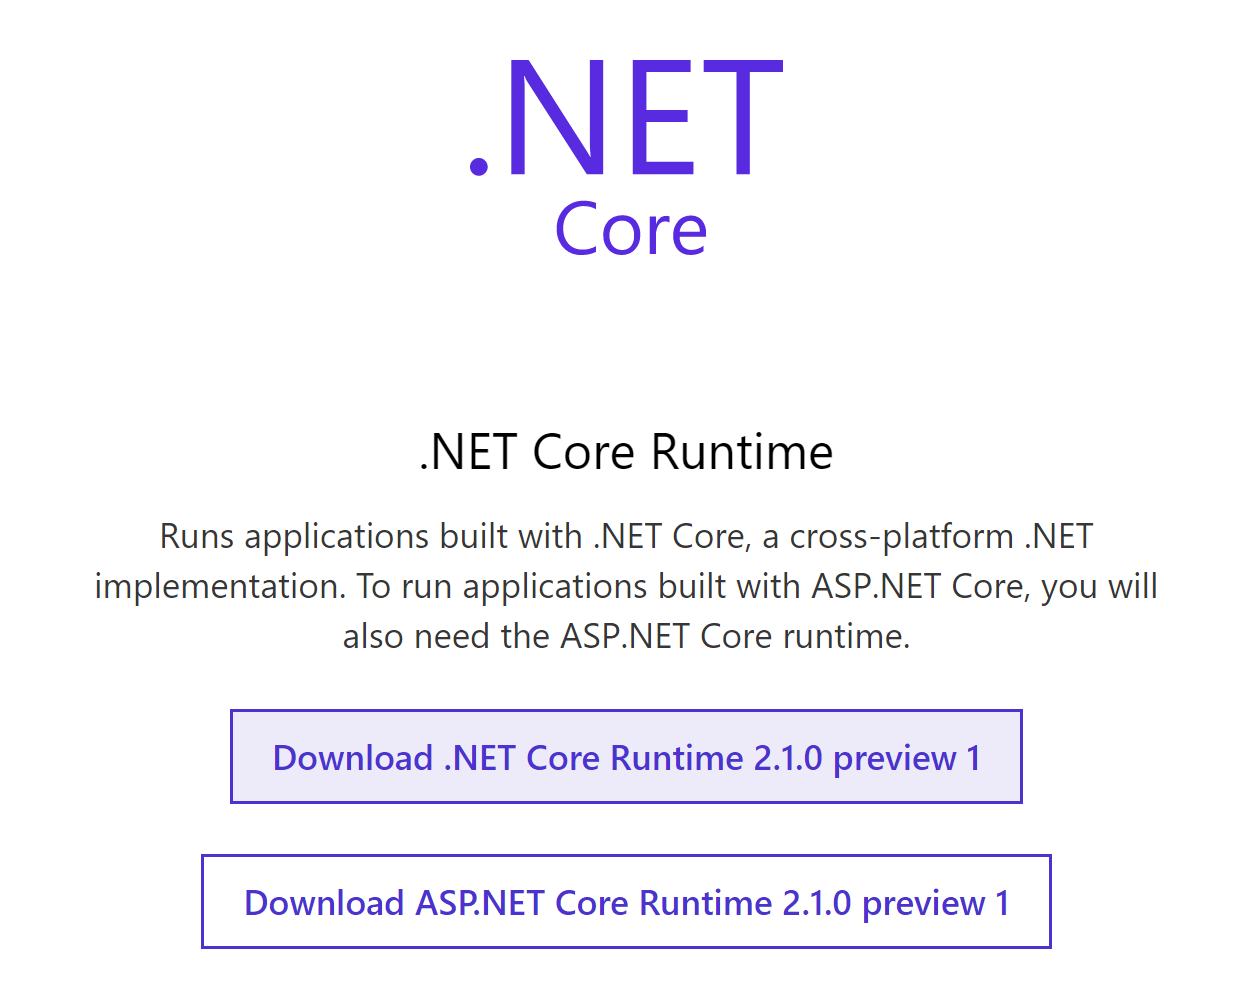 ASP.NET Core runtime